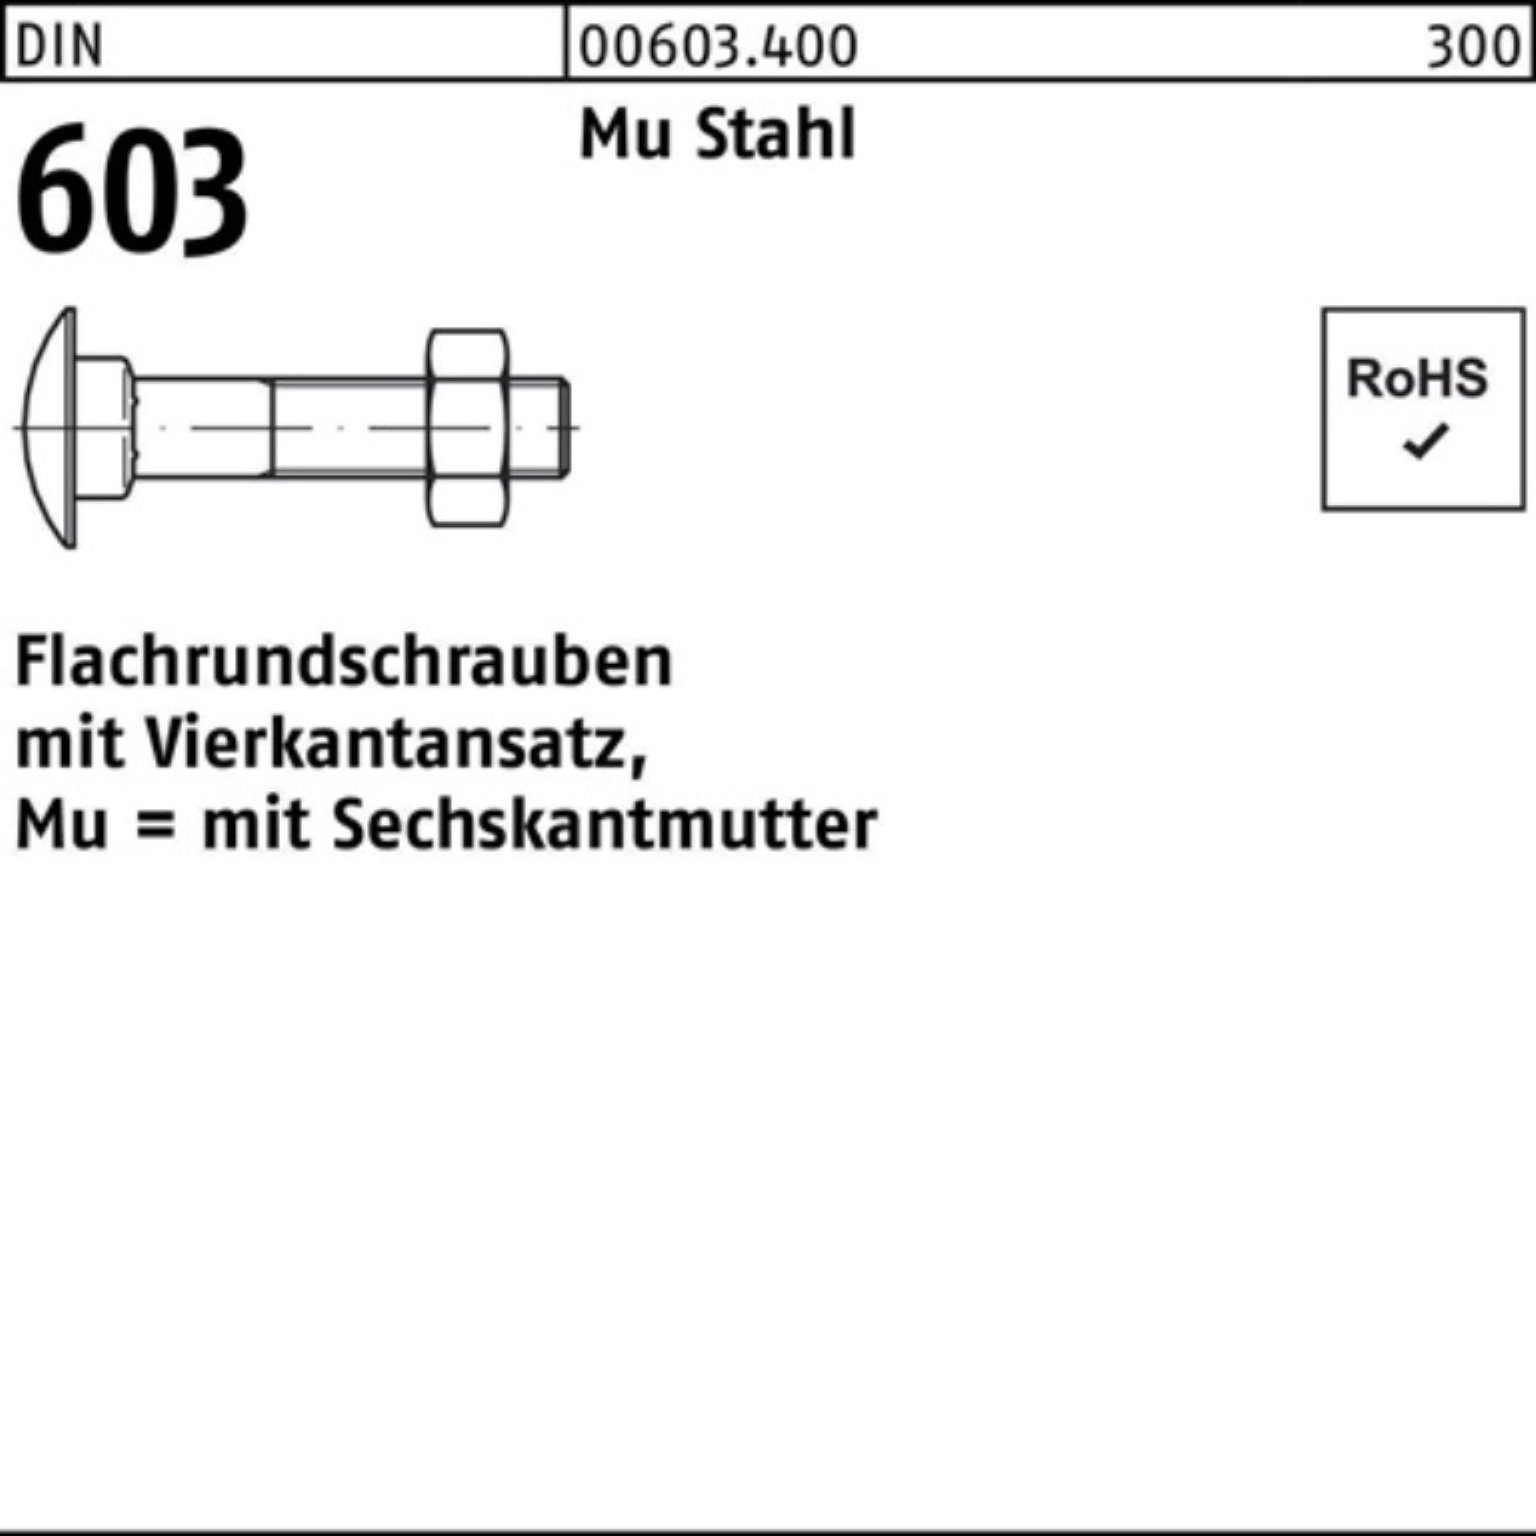 Reyher Schraube 200er DIN M Pack 603 Flachrundschraube M5x50 Vierkantansatz/6-ktmutter